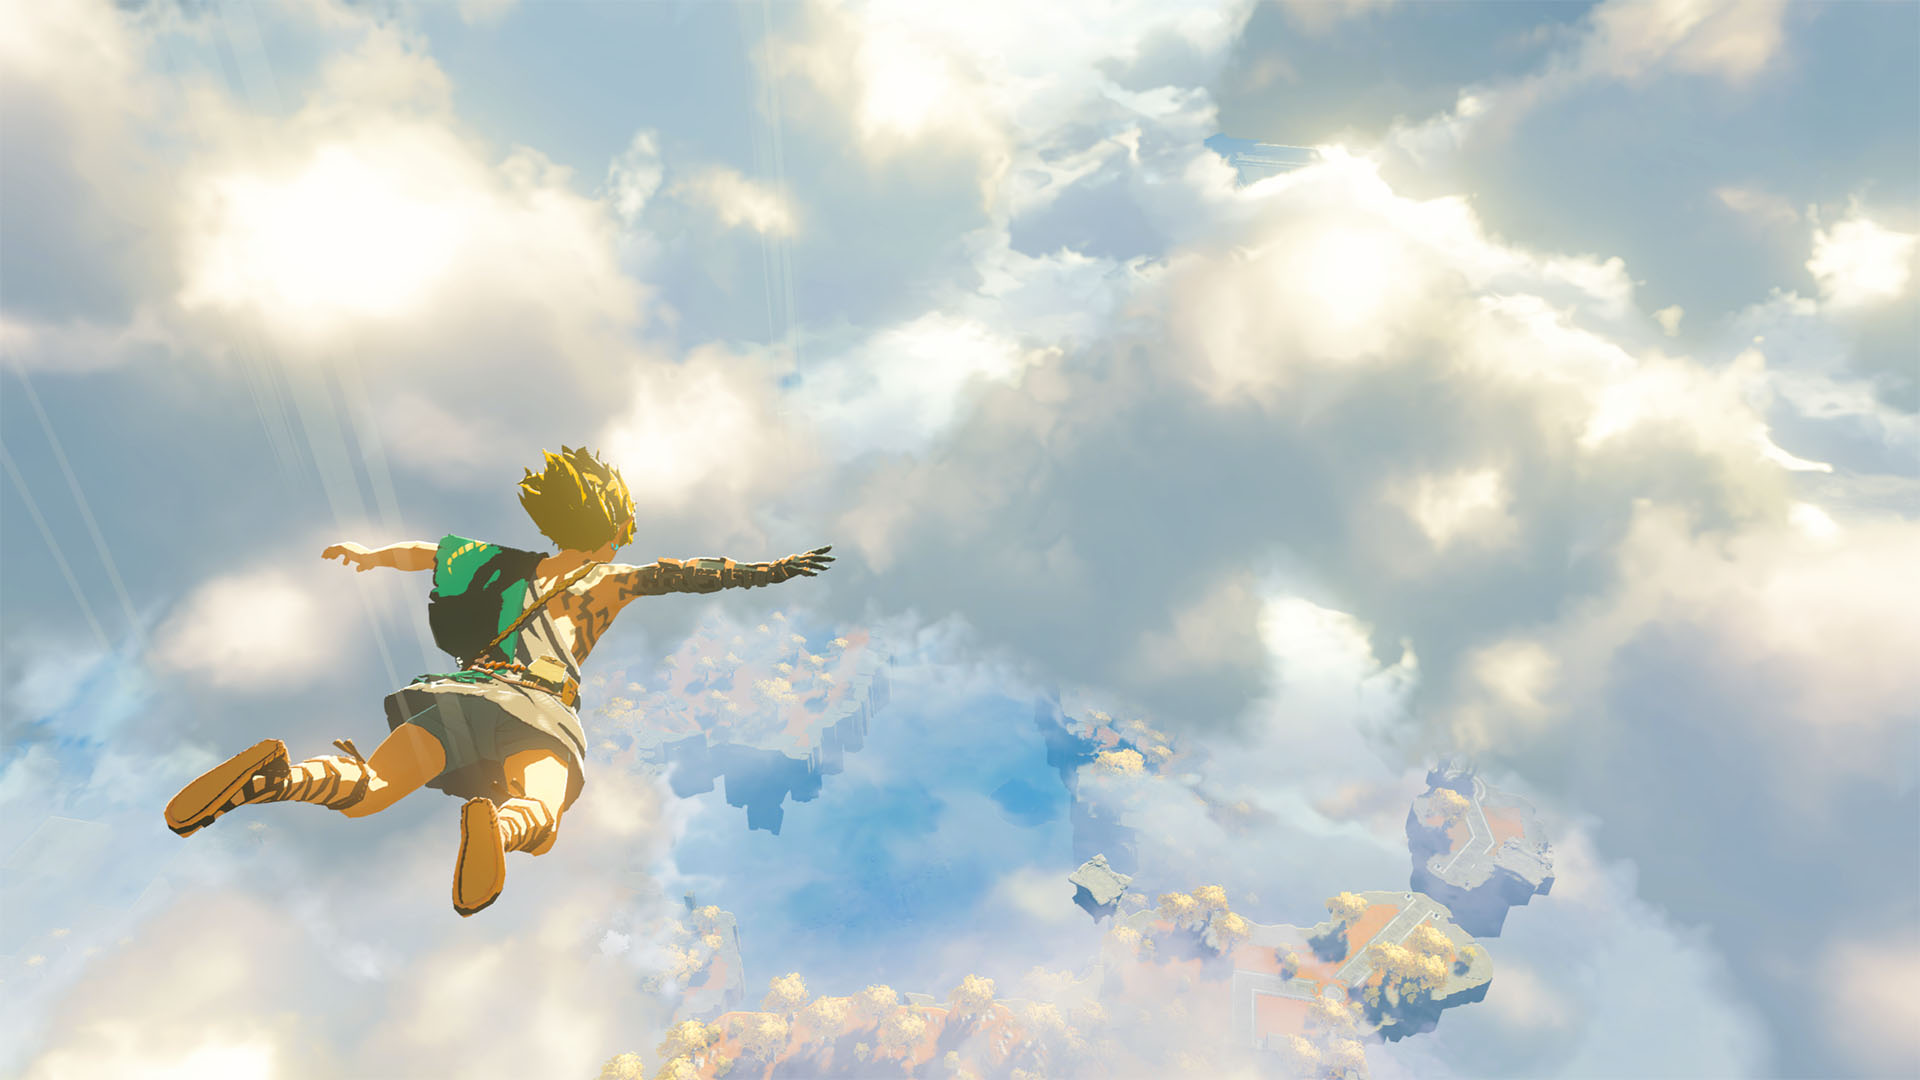 'Legend of Zelda: Breath of the Wild' sequel delayed to spring 2023